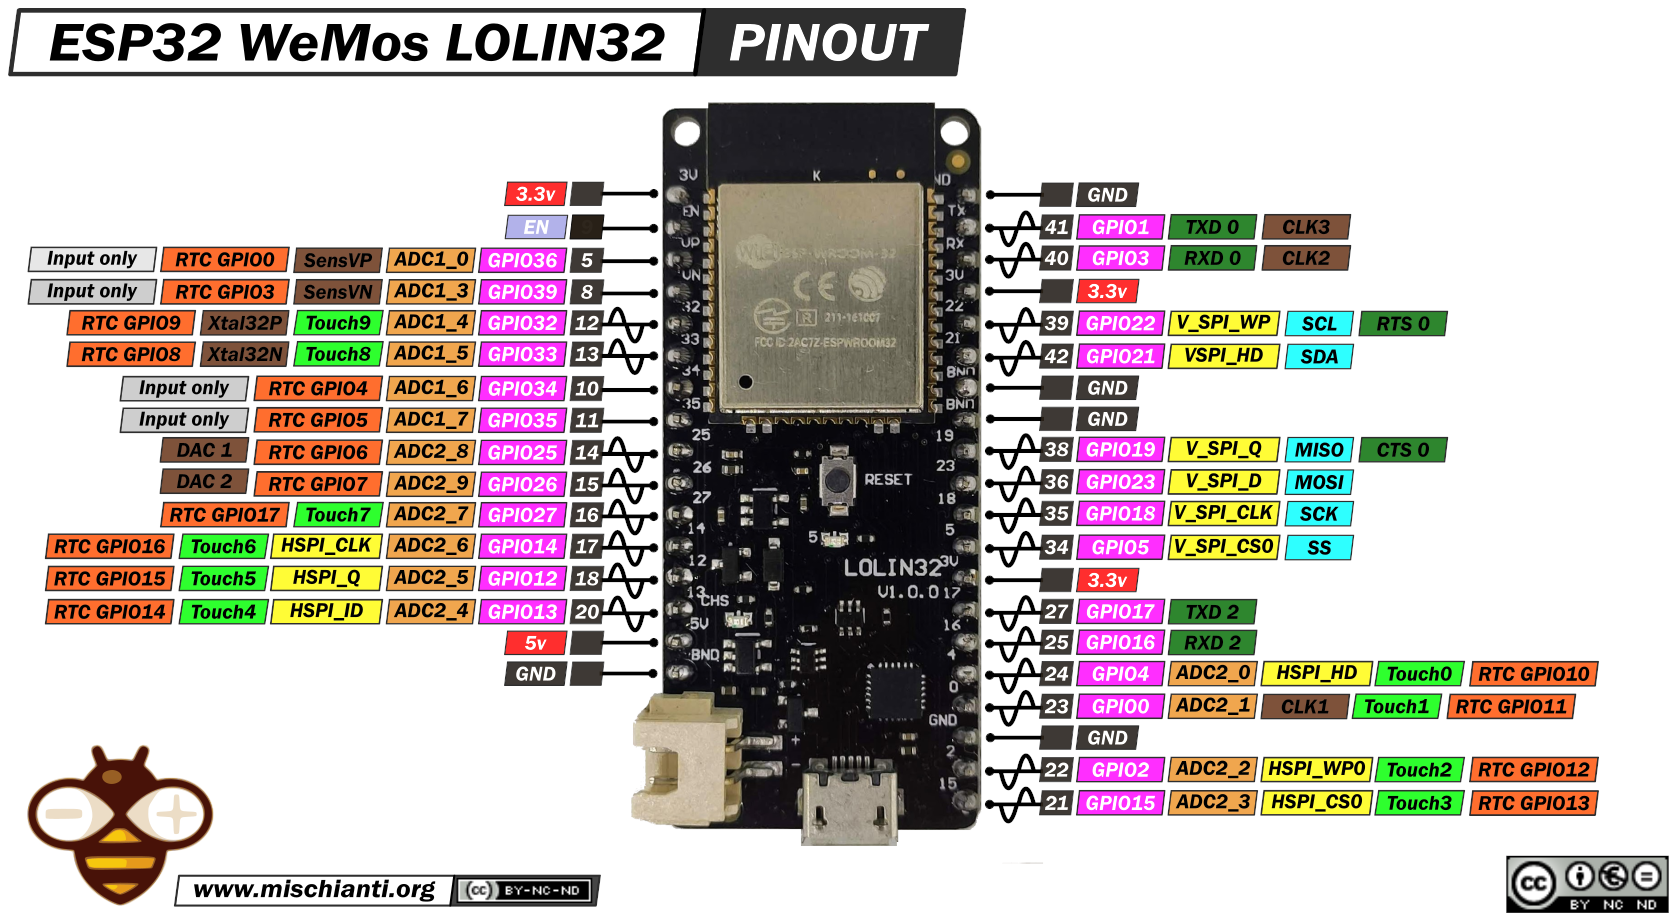 LOLIN32 ESP32-based board